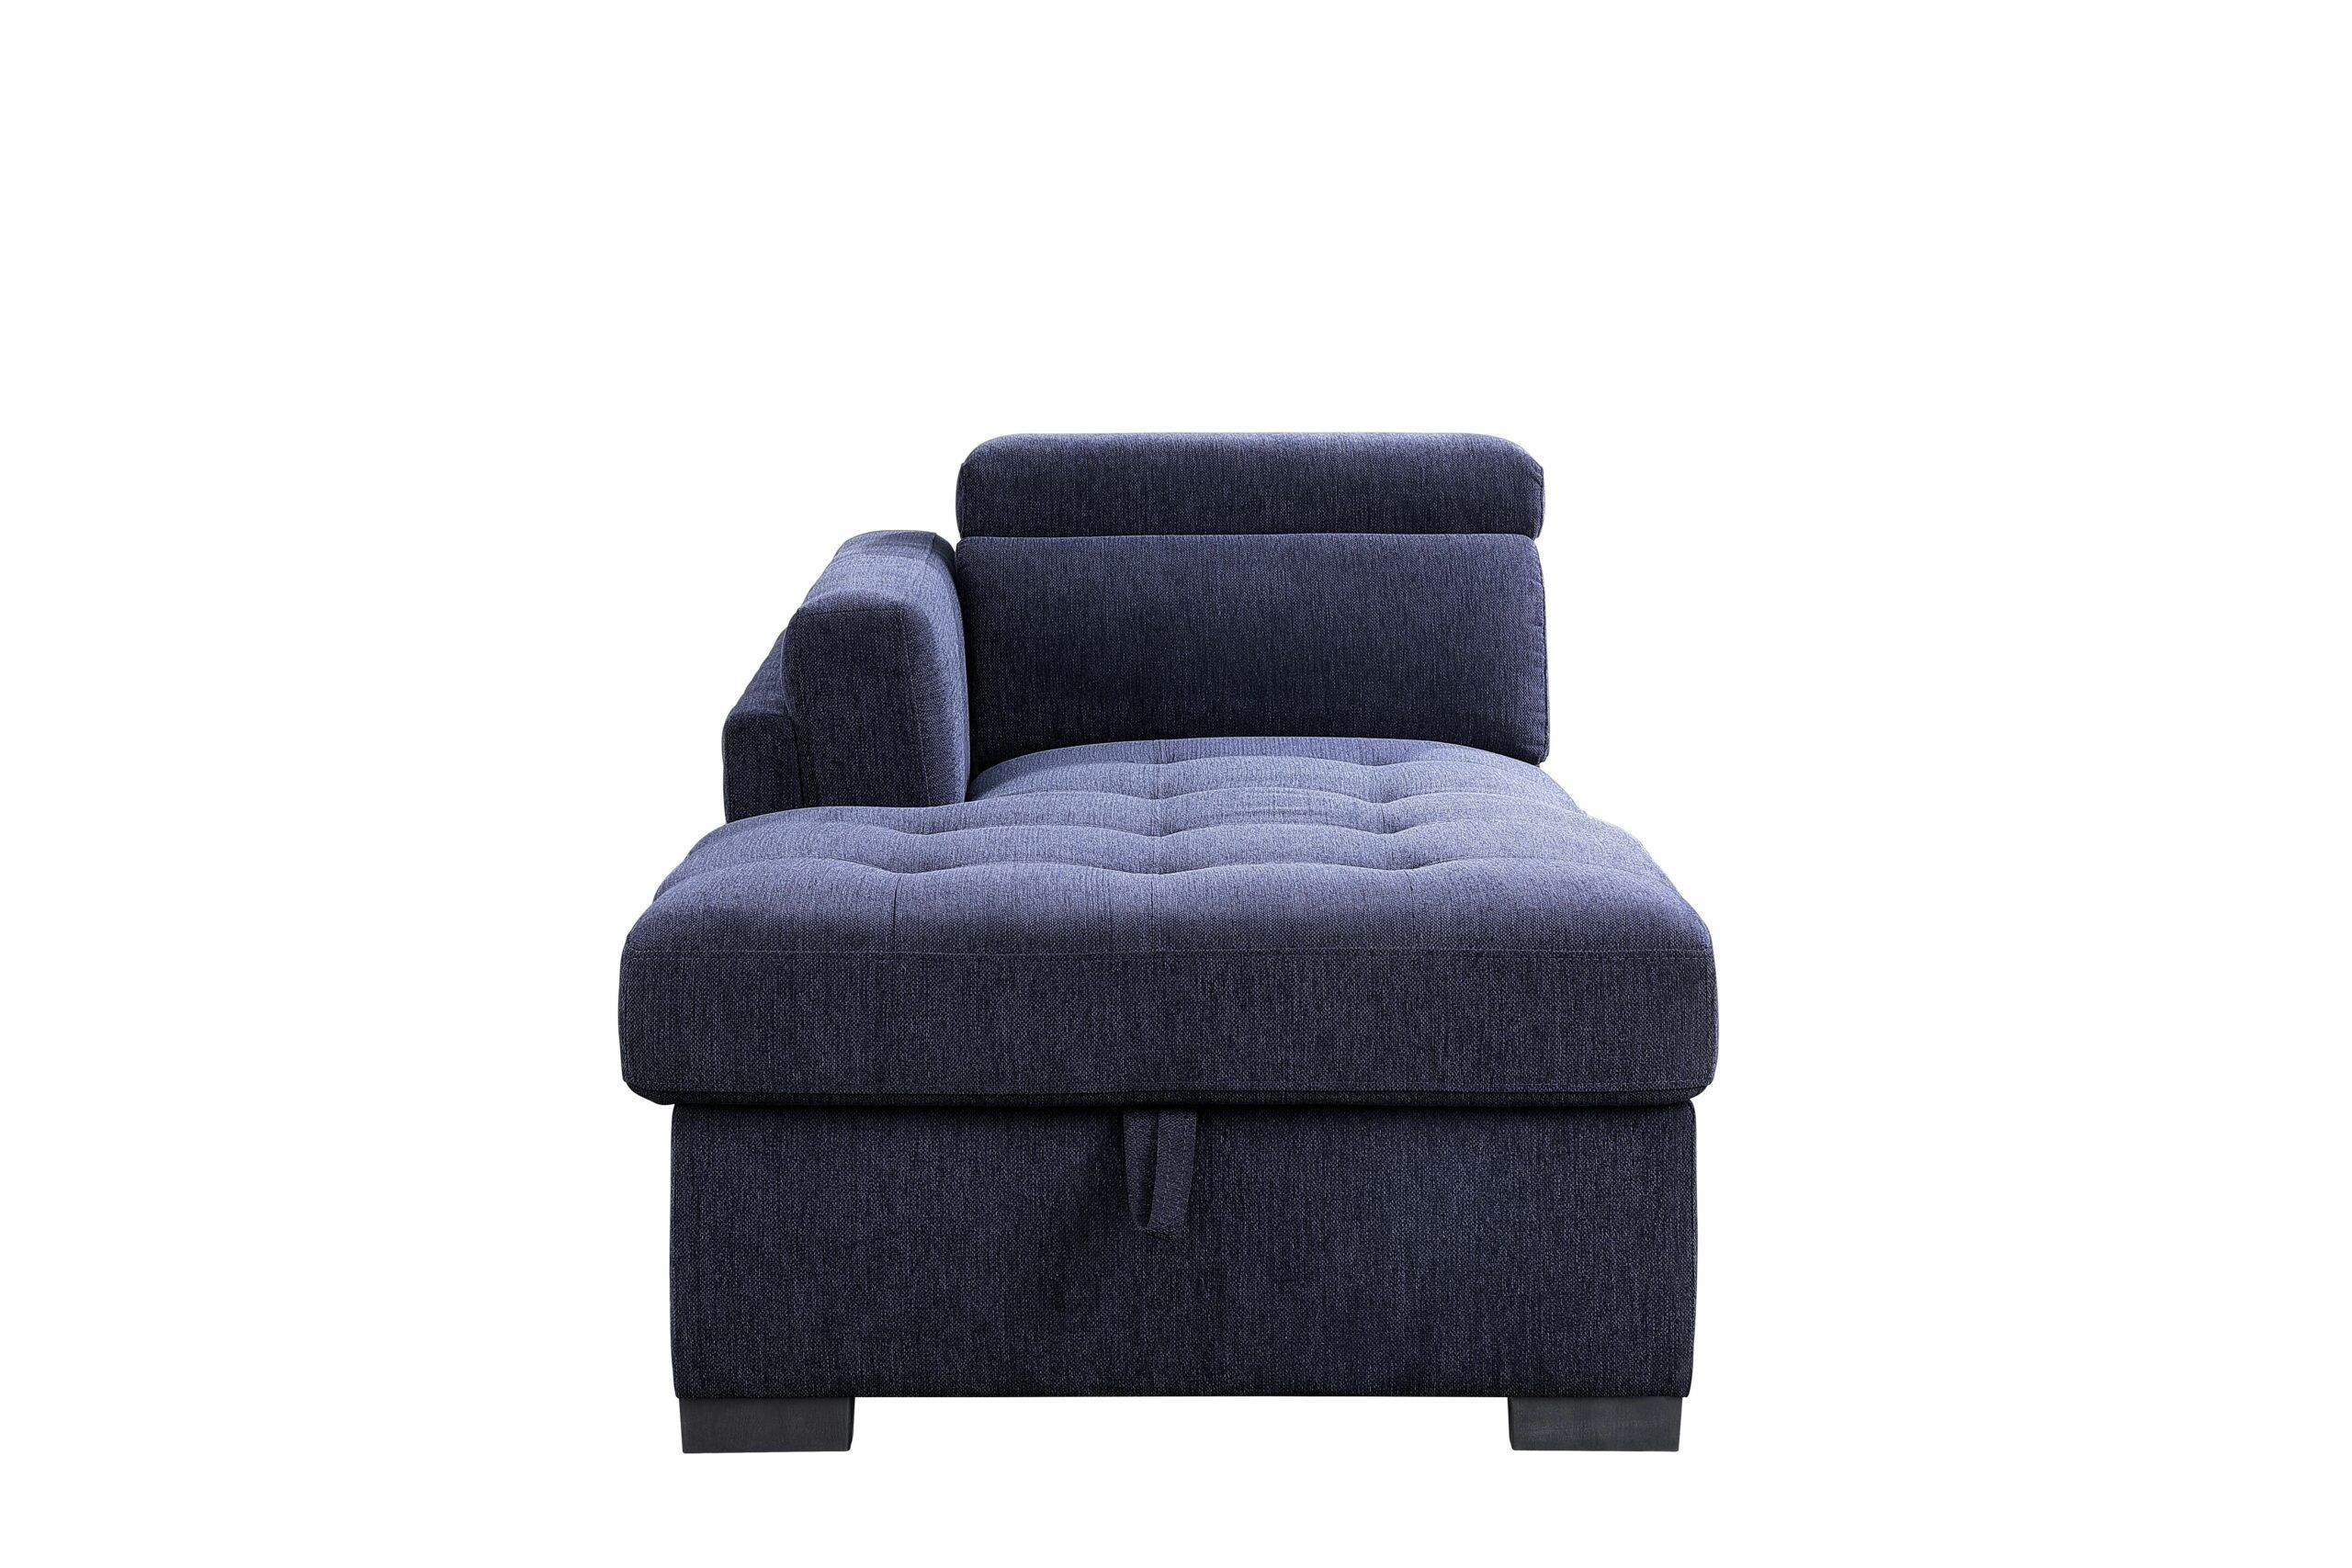 Seating furniture – sleeper sectional
sofa